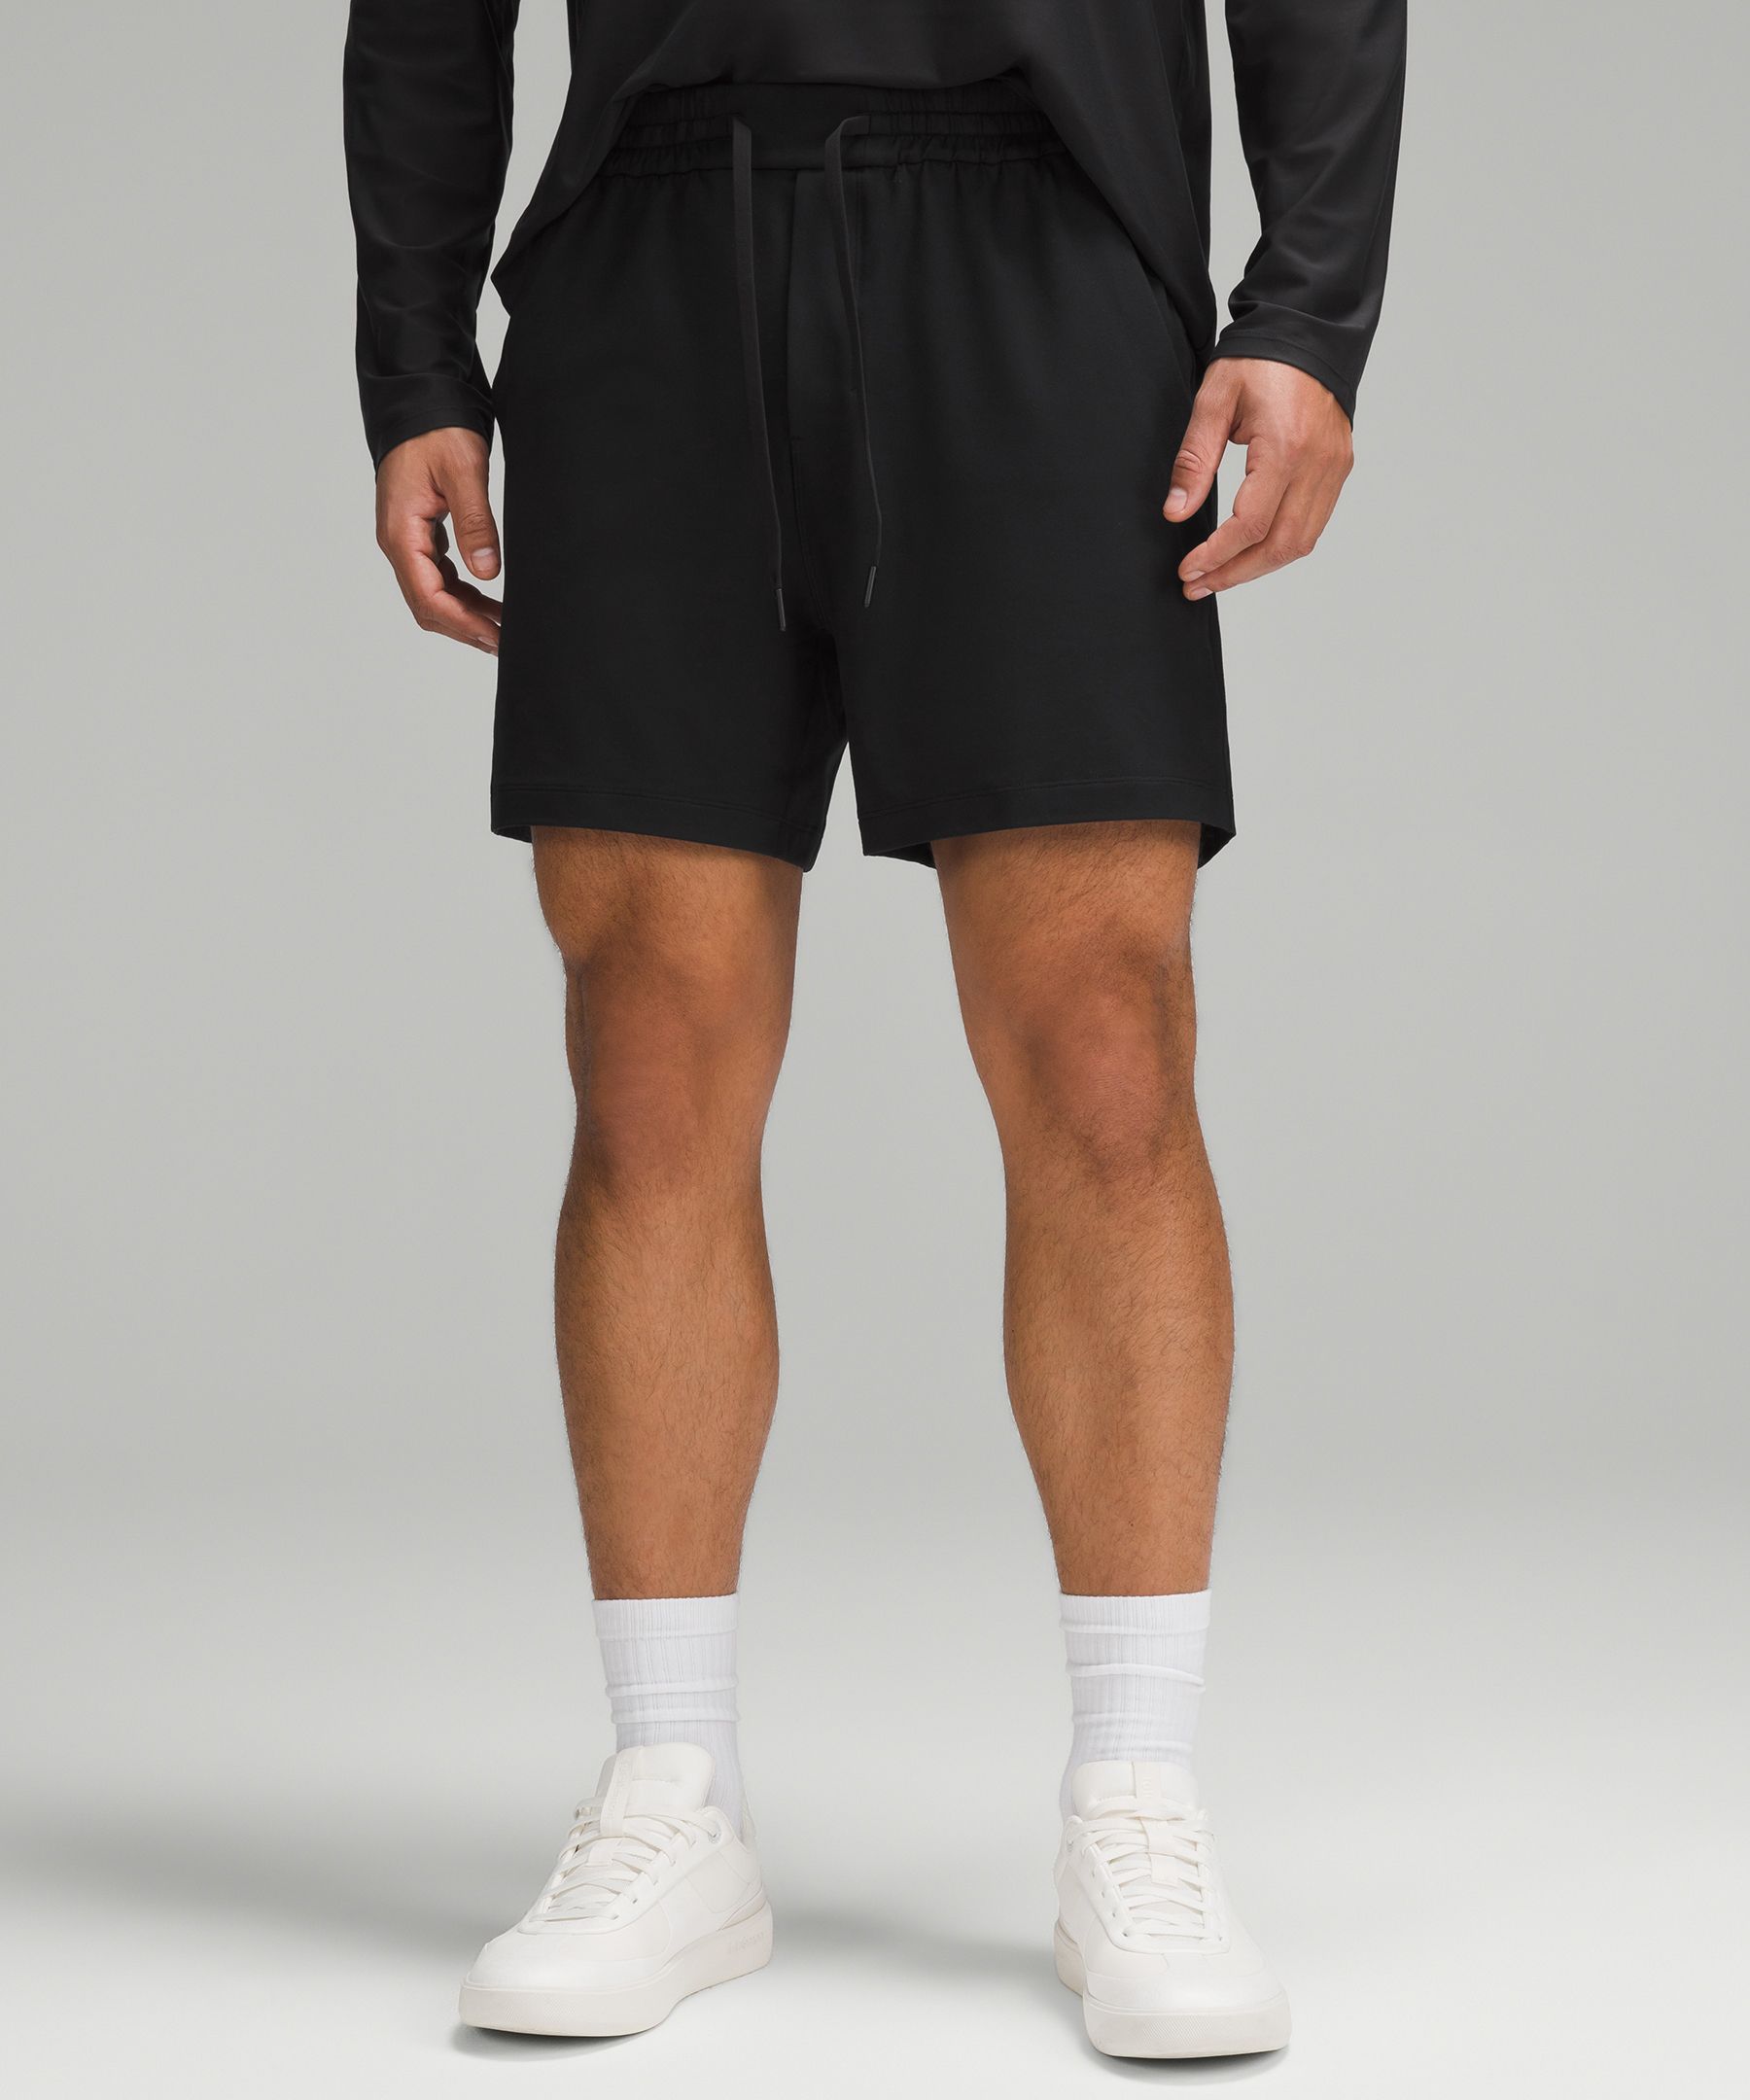 Soft Jersey Short 5, Men's Shorts